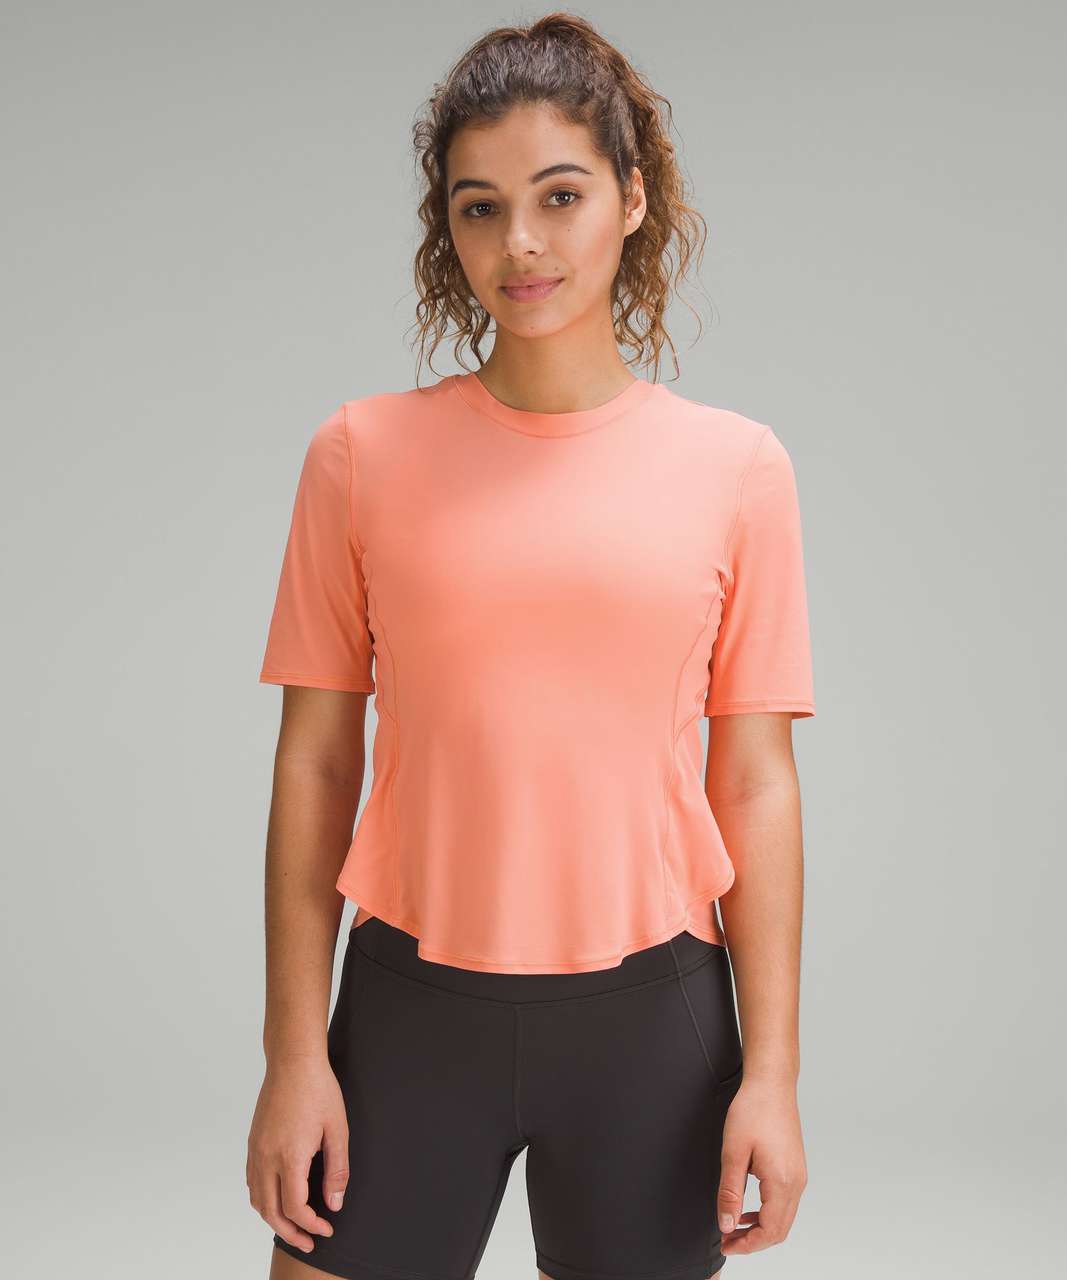 Lululemon UV Protection Fold-Over Running T-Shirt - Sunny Coral